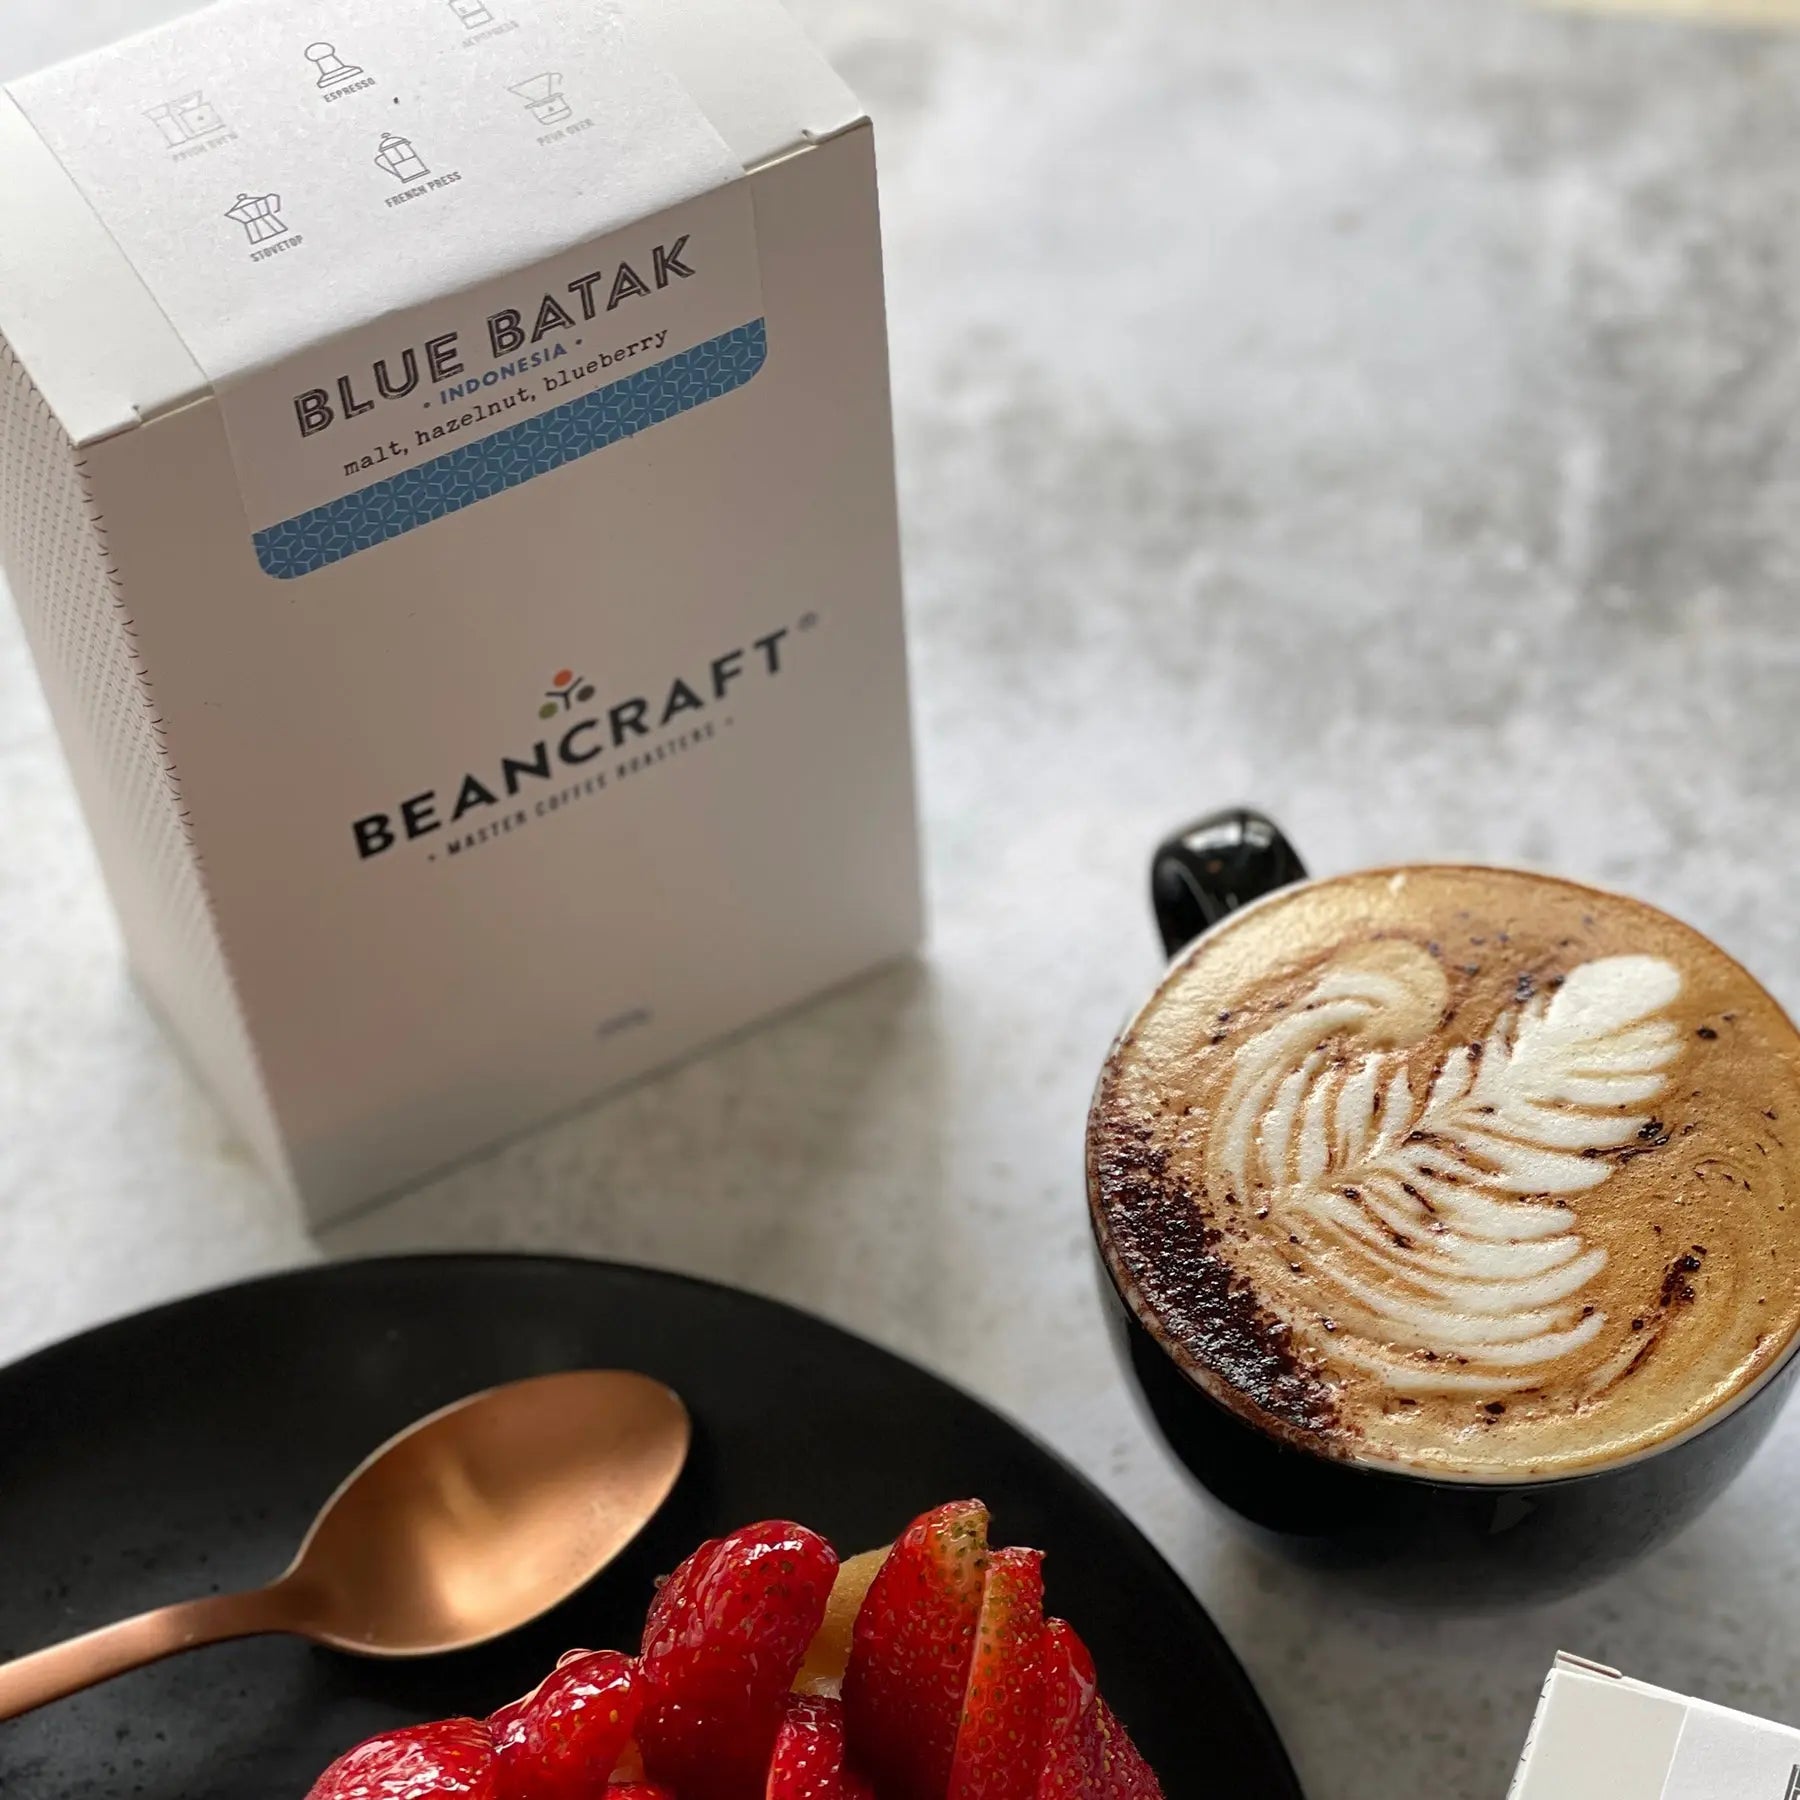 Blue Batak Coffee - Indonesia - 200g beancraft